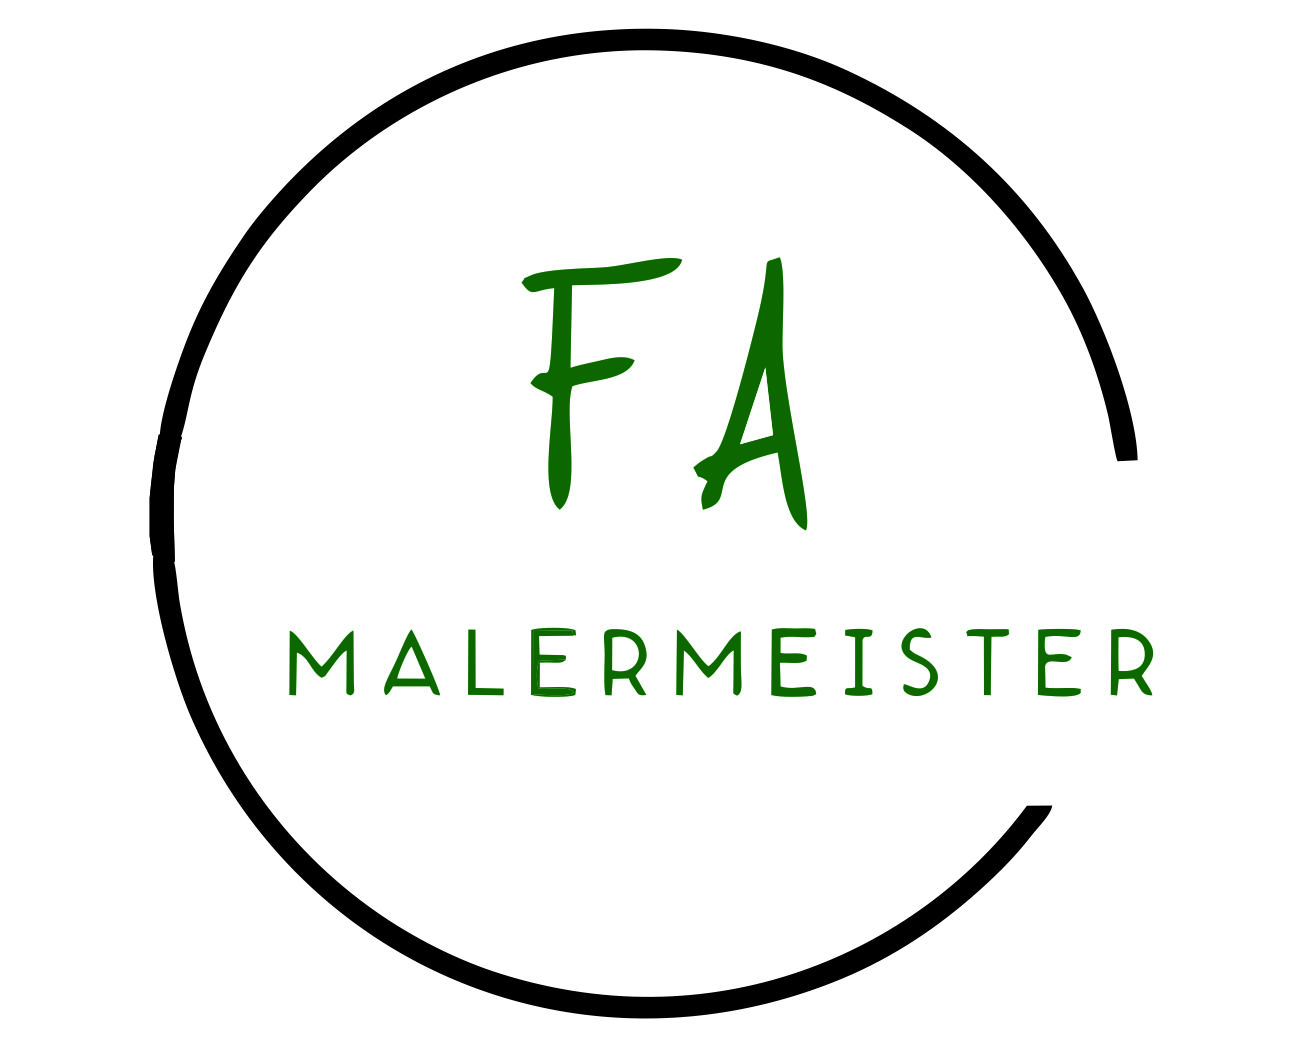 (c) Malermeisterfranz.com